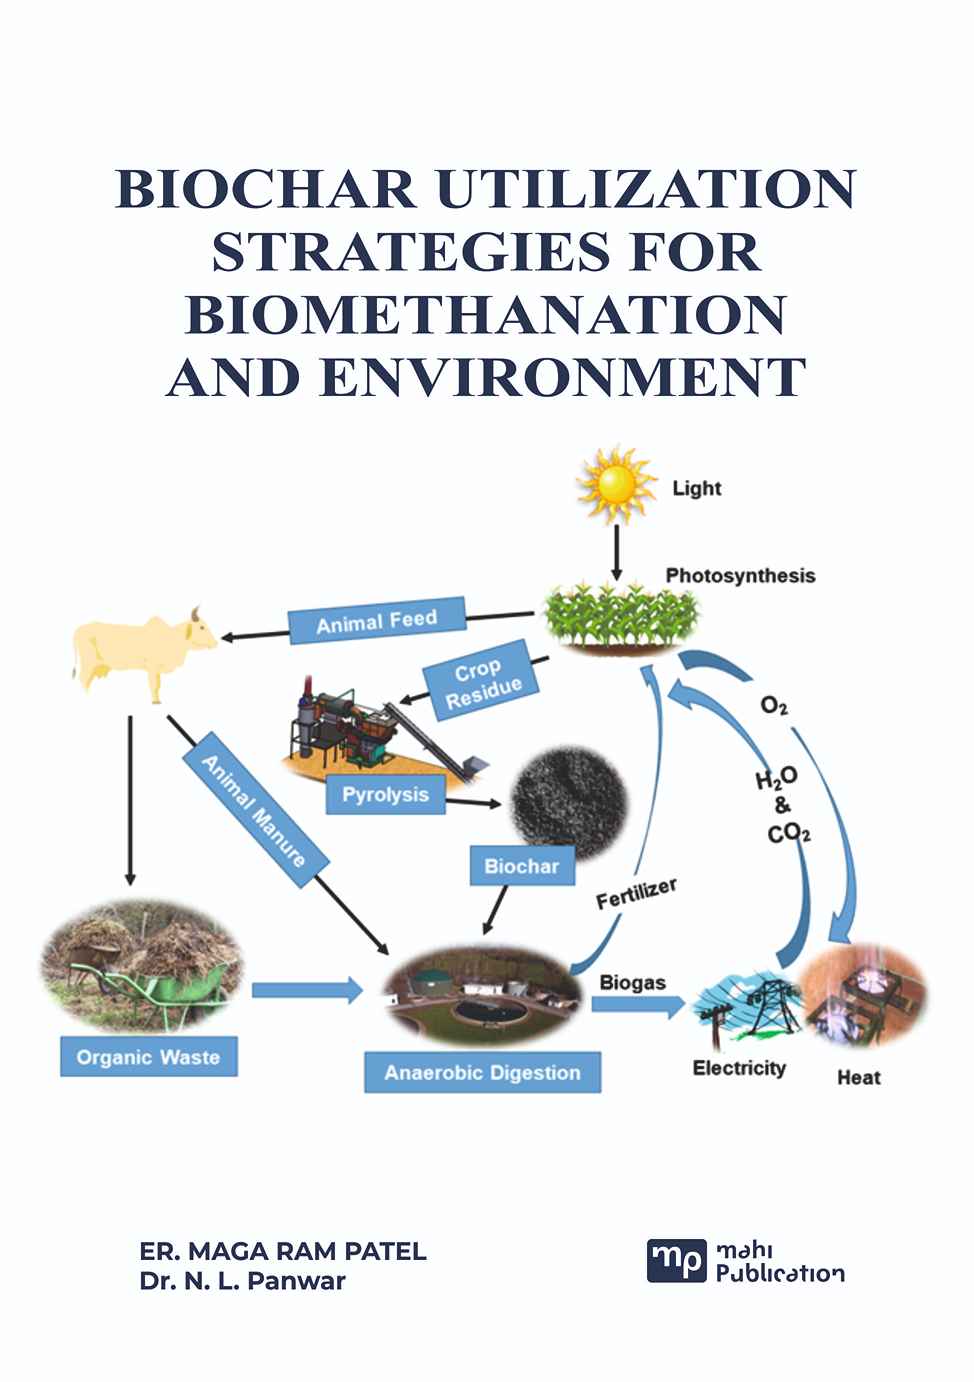 Biochar Utilization Strategies for Biomethanation and Environment